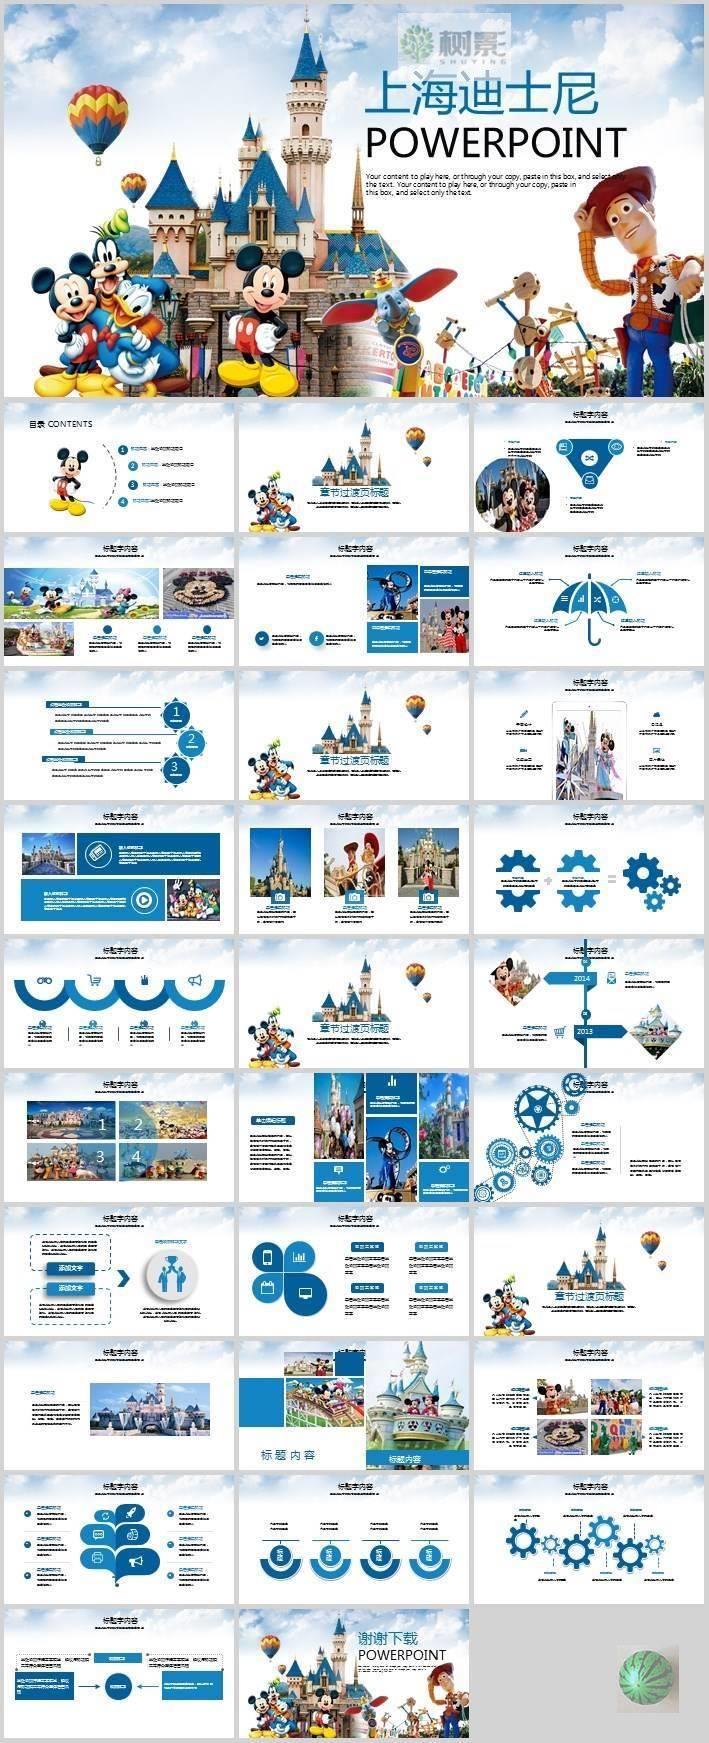 Q卡通上海迪士尼乐园儿童游乐场渡假旅游项目策划推广宣传ppt模板